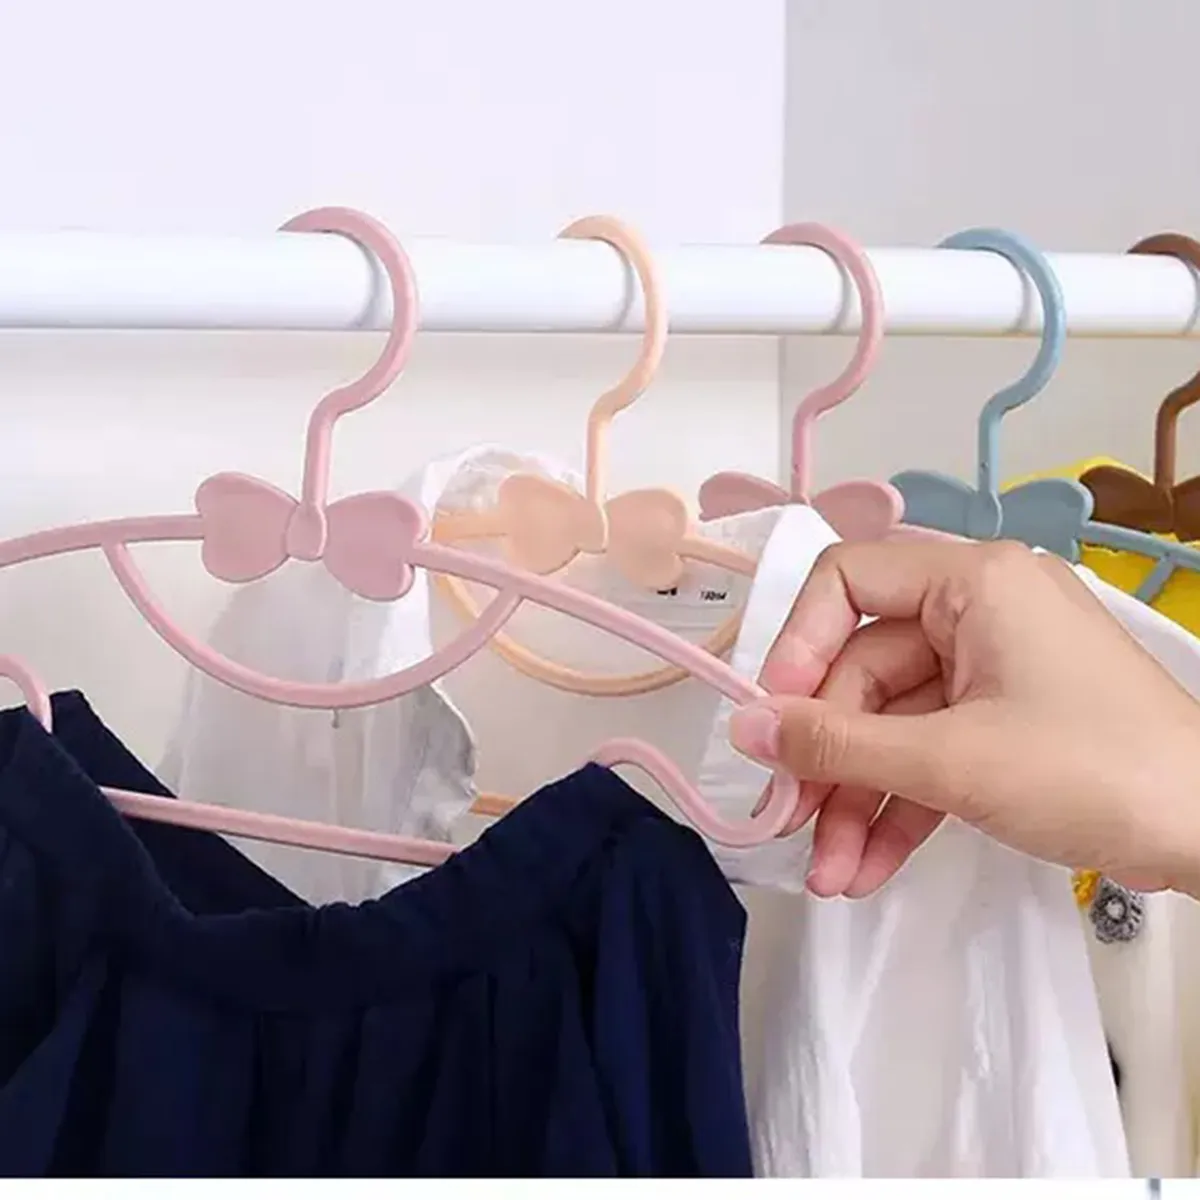 Monaco Kids' Clothes Hangers 10pk